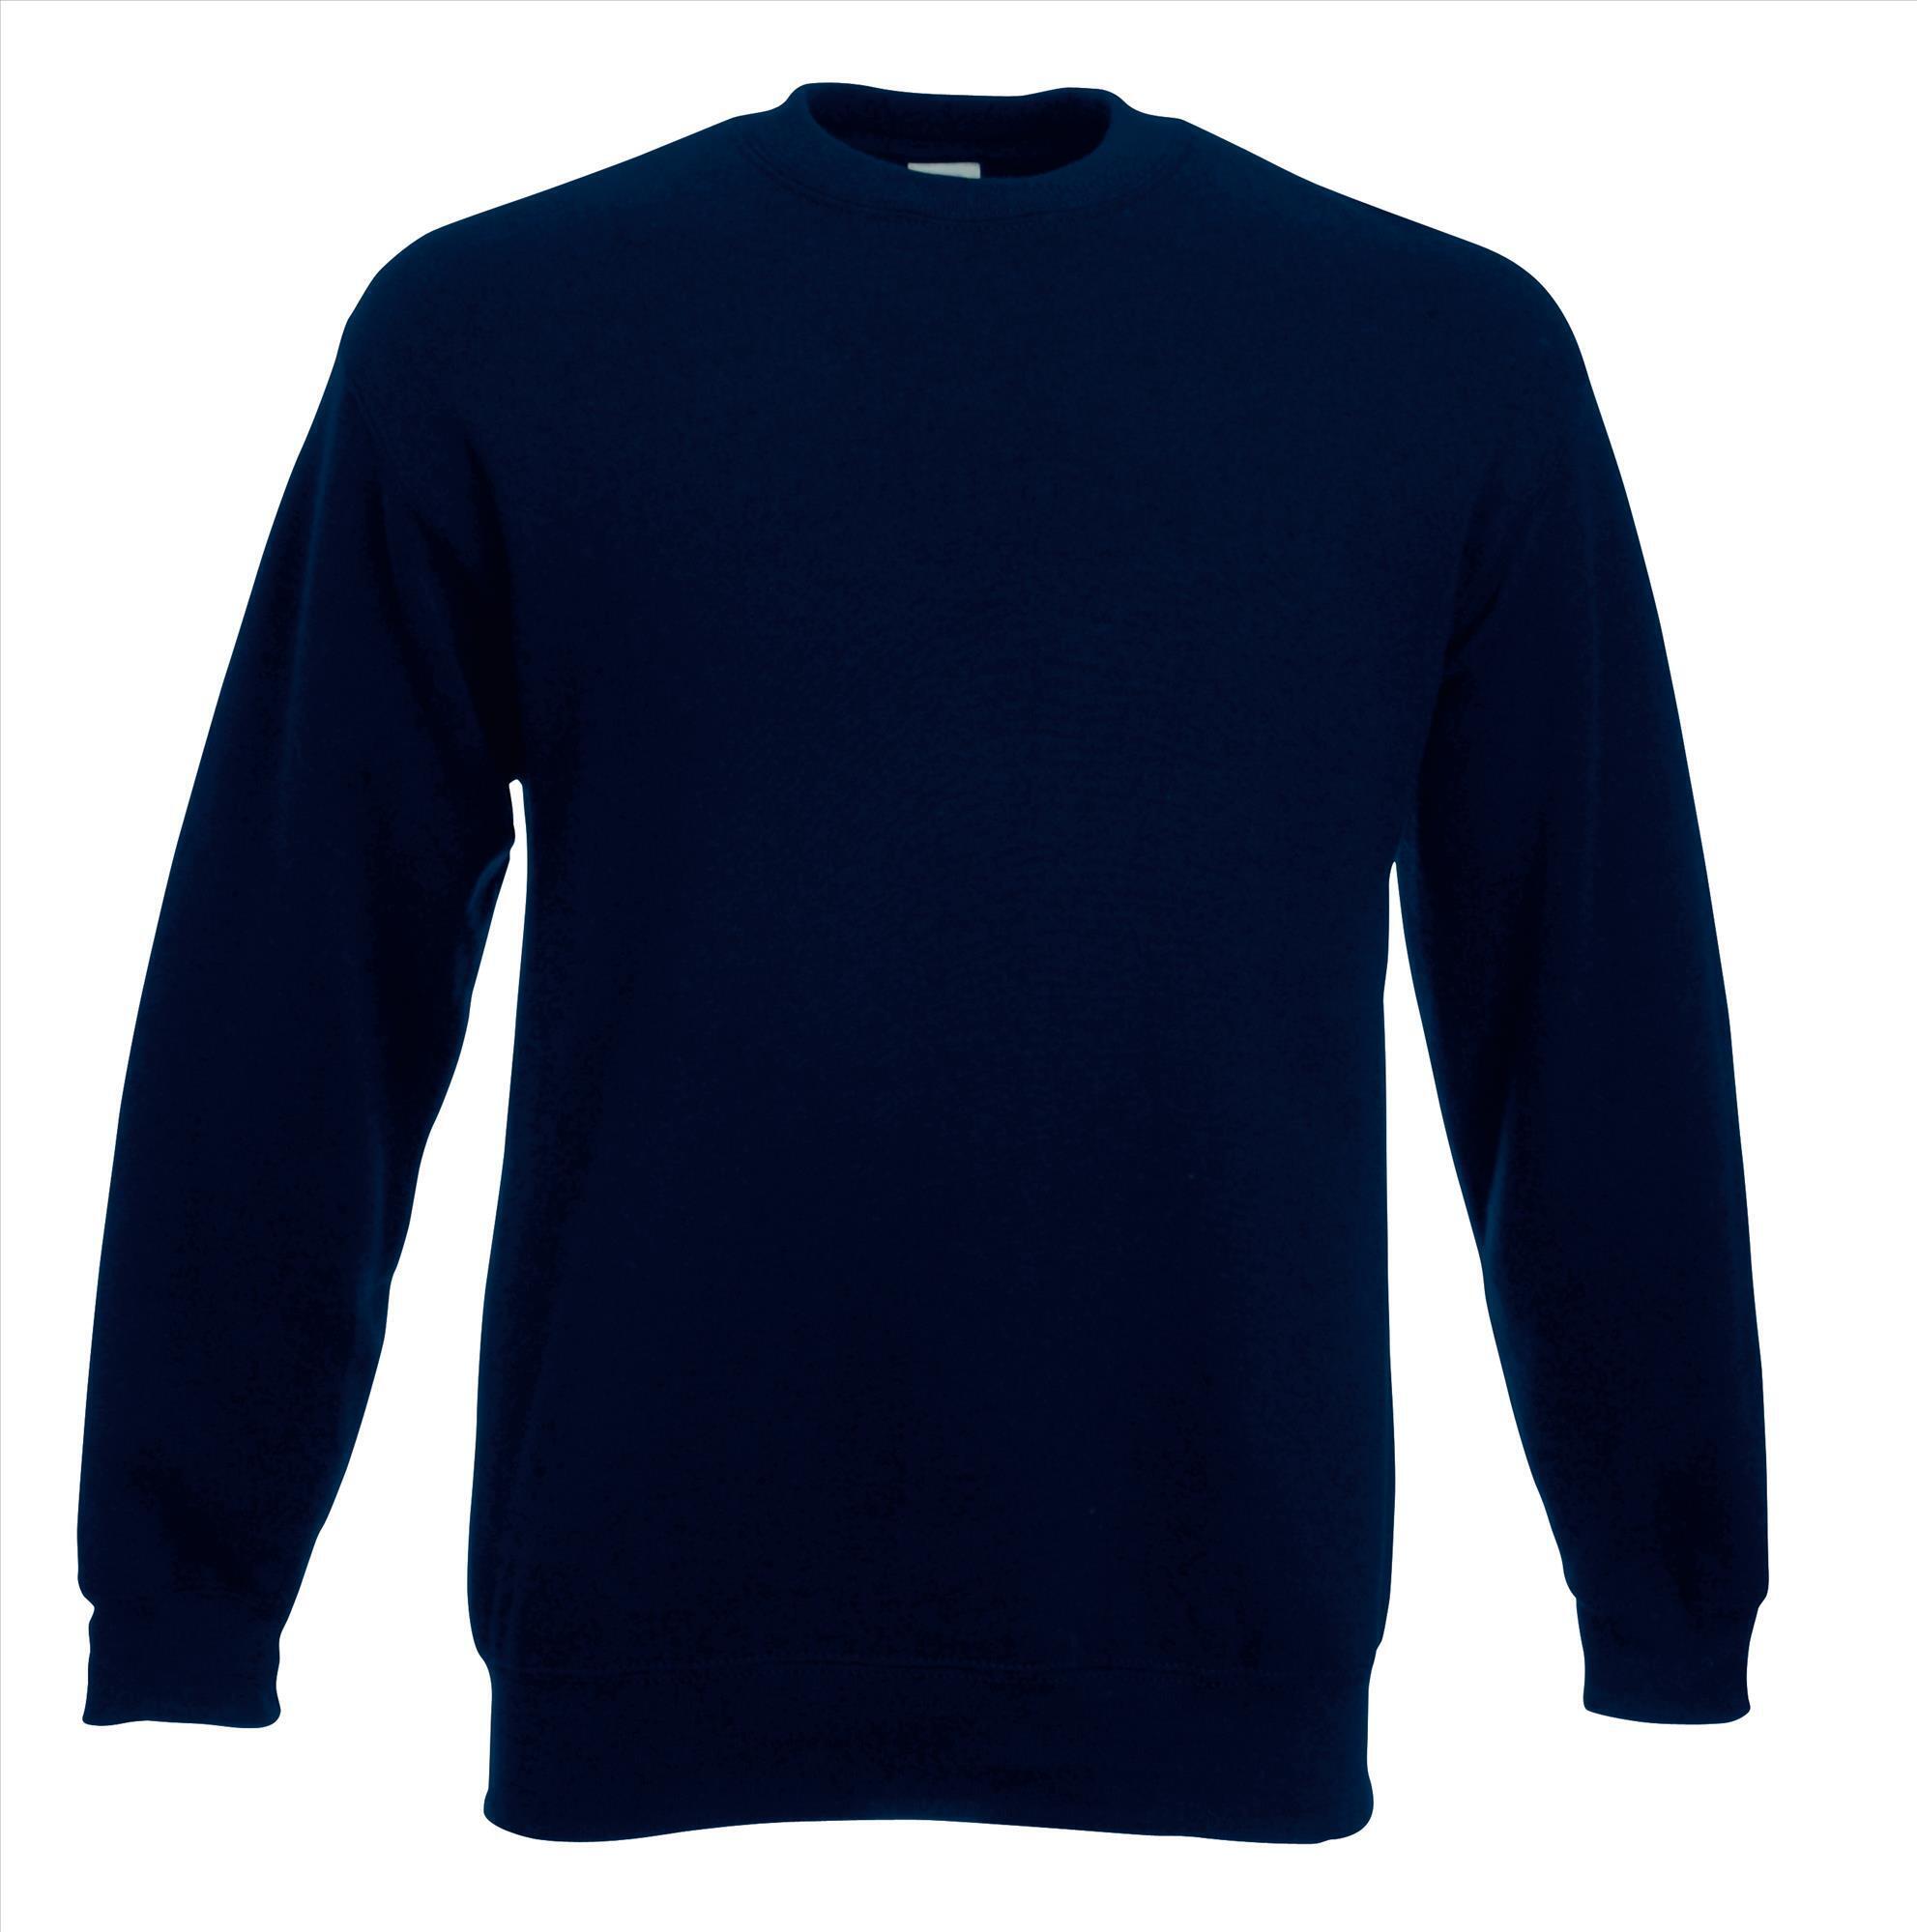 Heren Sweater diep Marine blauw te personaliseren